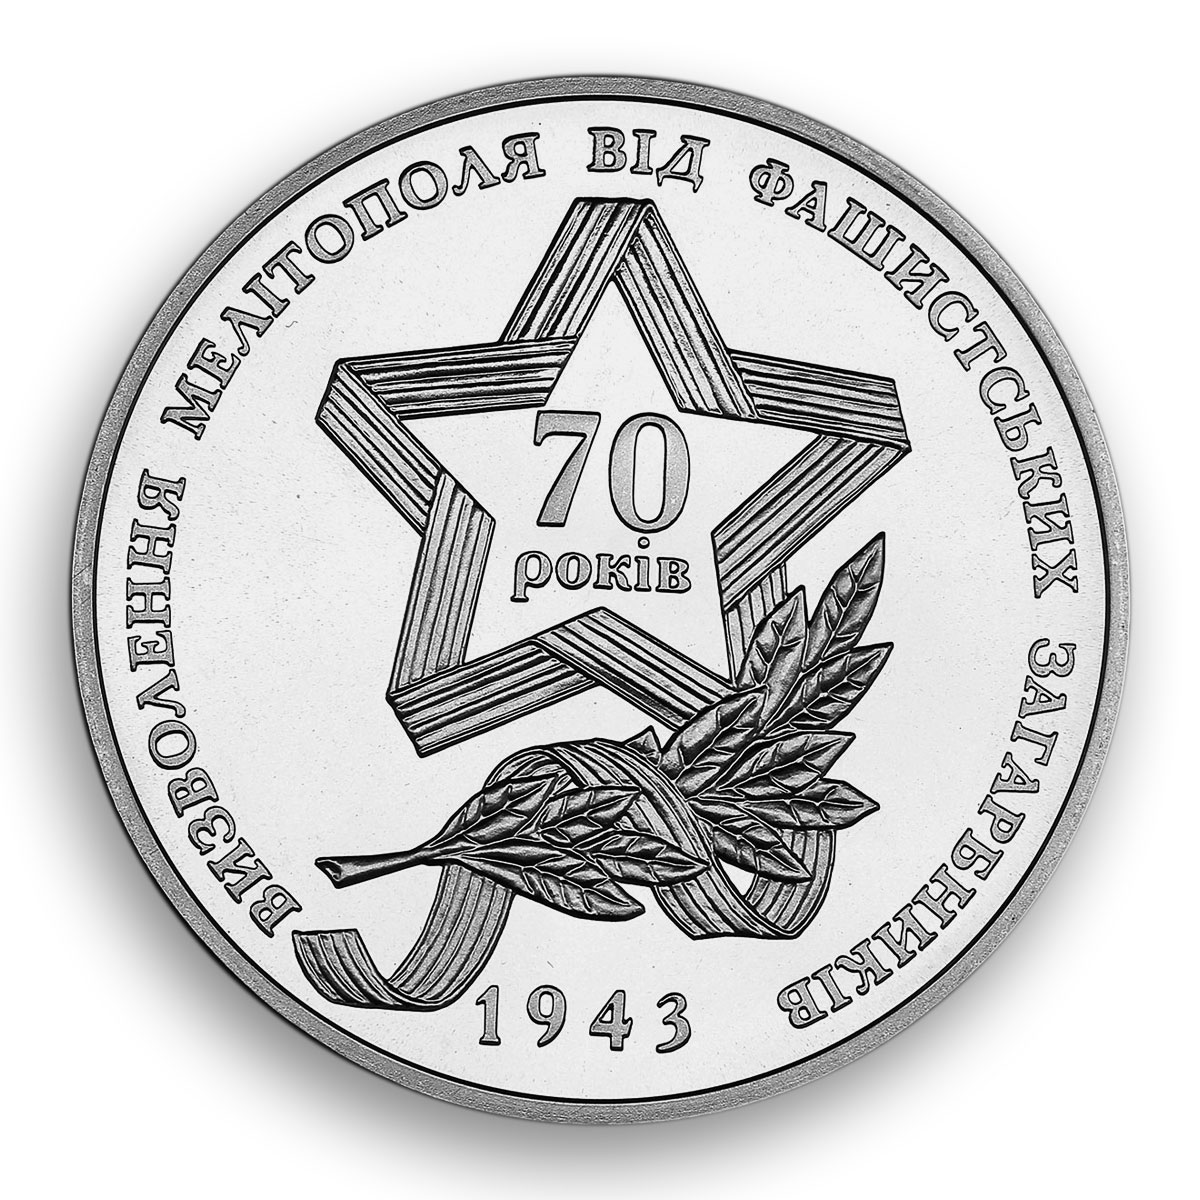 Ukraine 5 hryvnia 70 years Liberation of Kharkiv from fascists nickel coin 2013